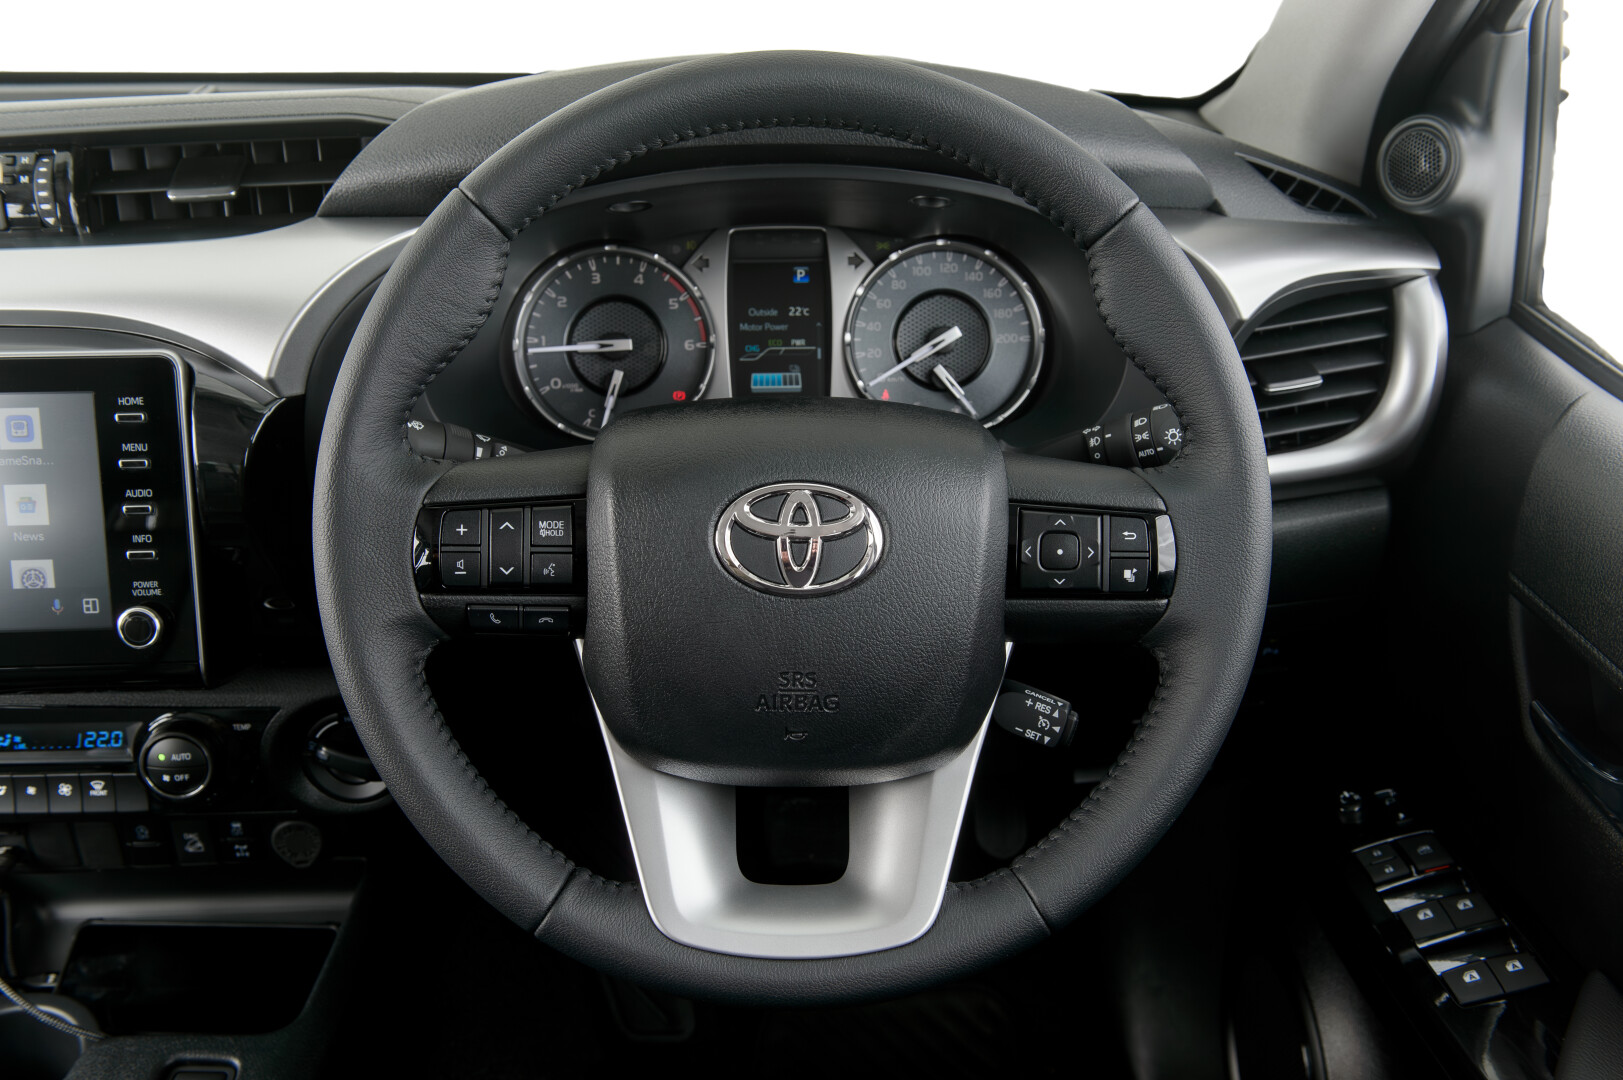 Toyota Hilux 48V Hybrid dashboard view